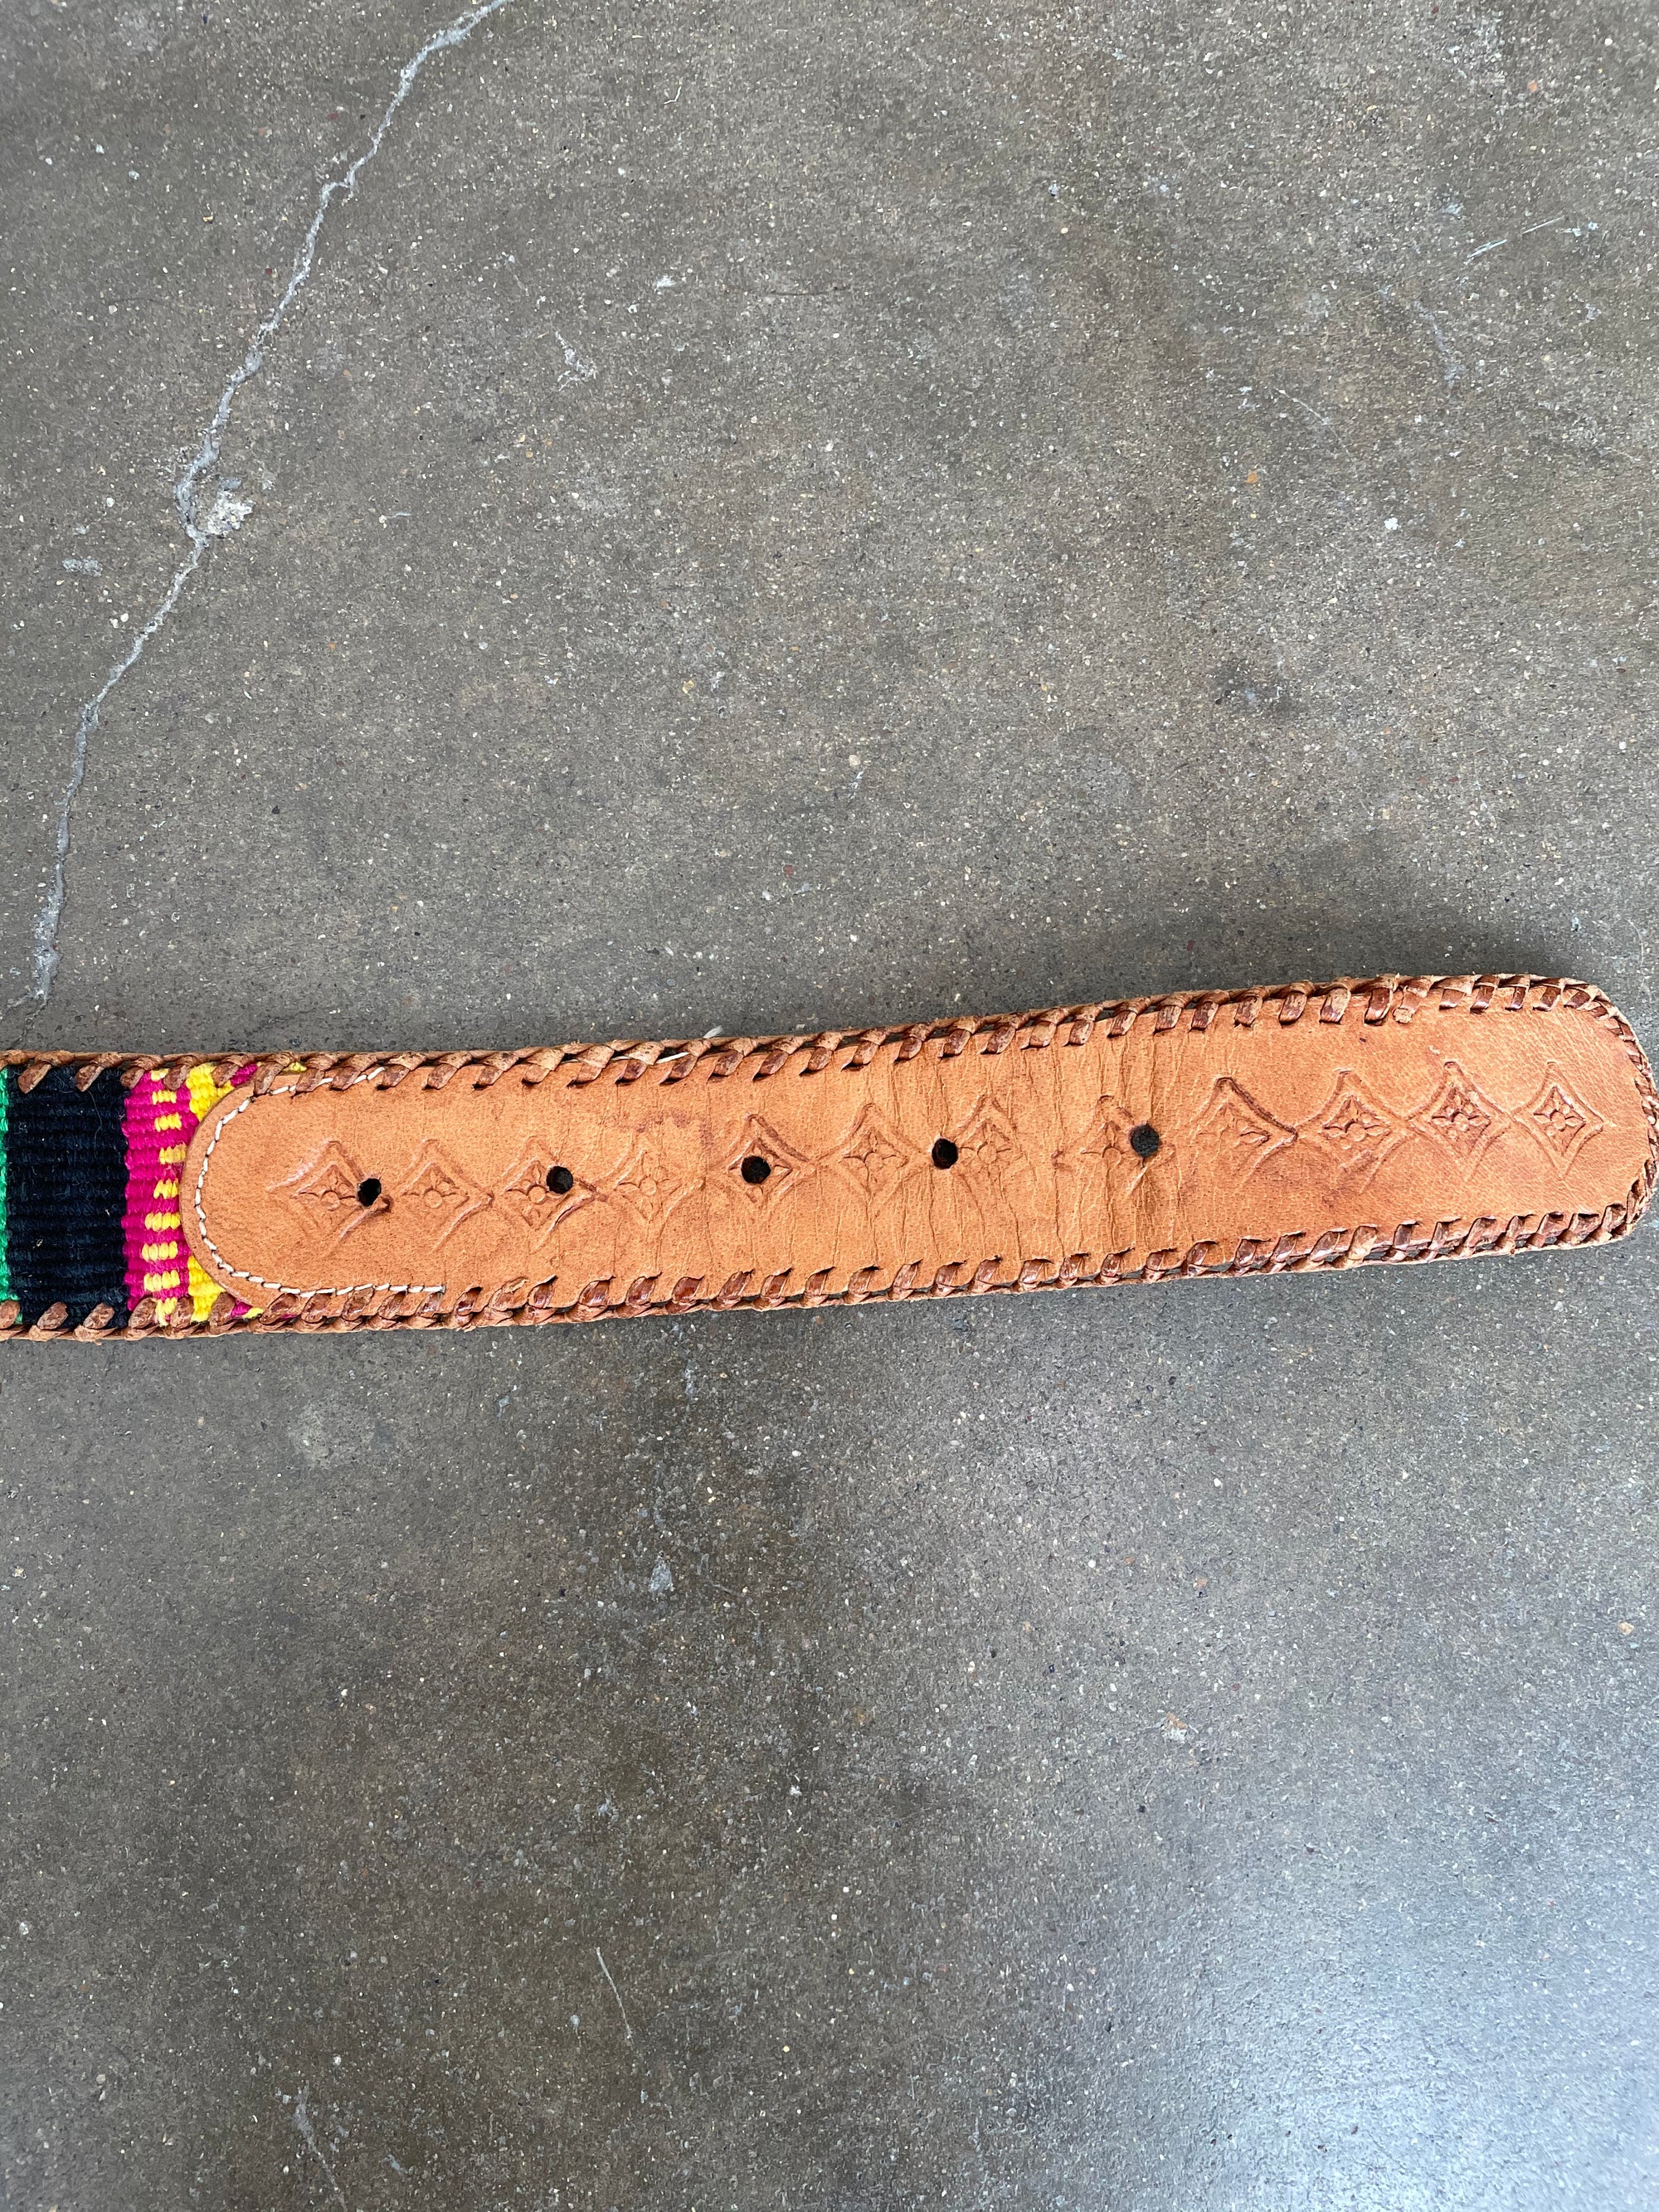 Vintage Colorful Woven Belt